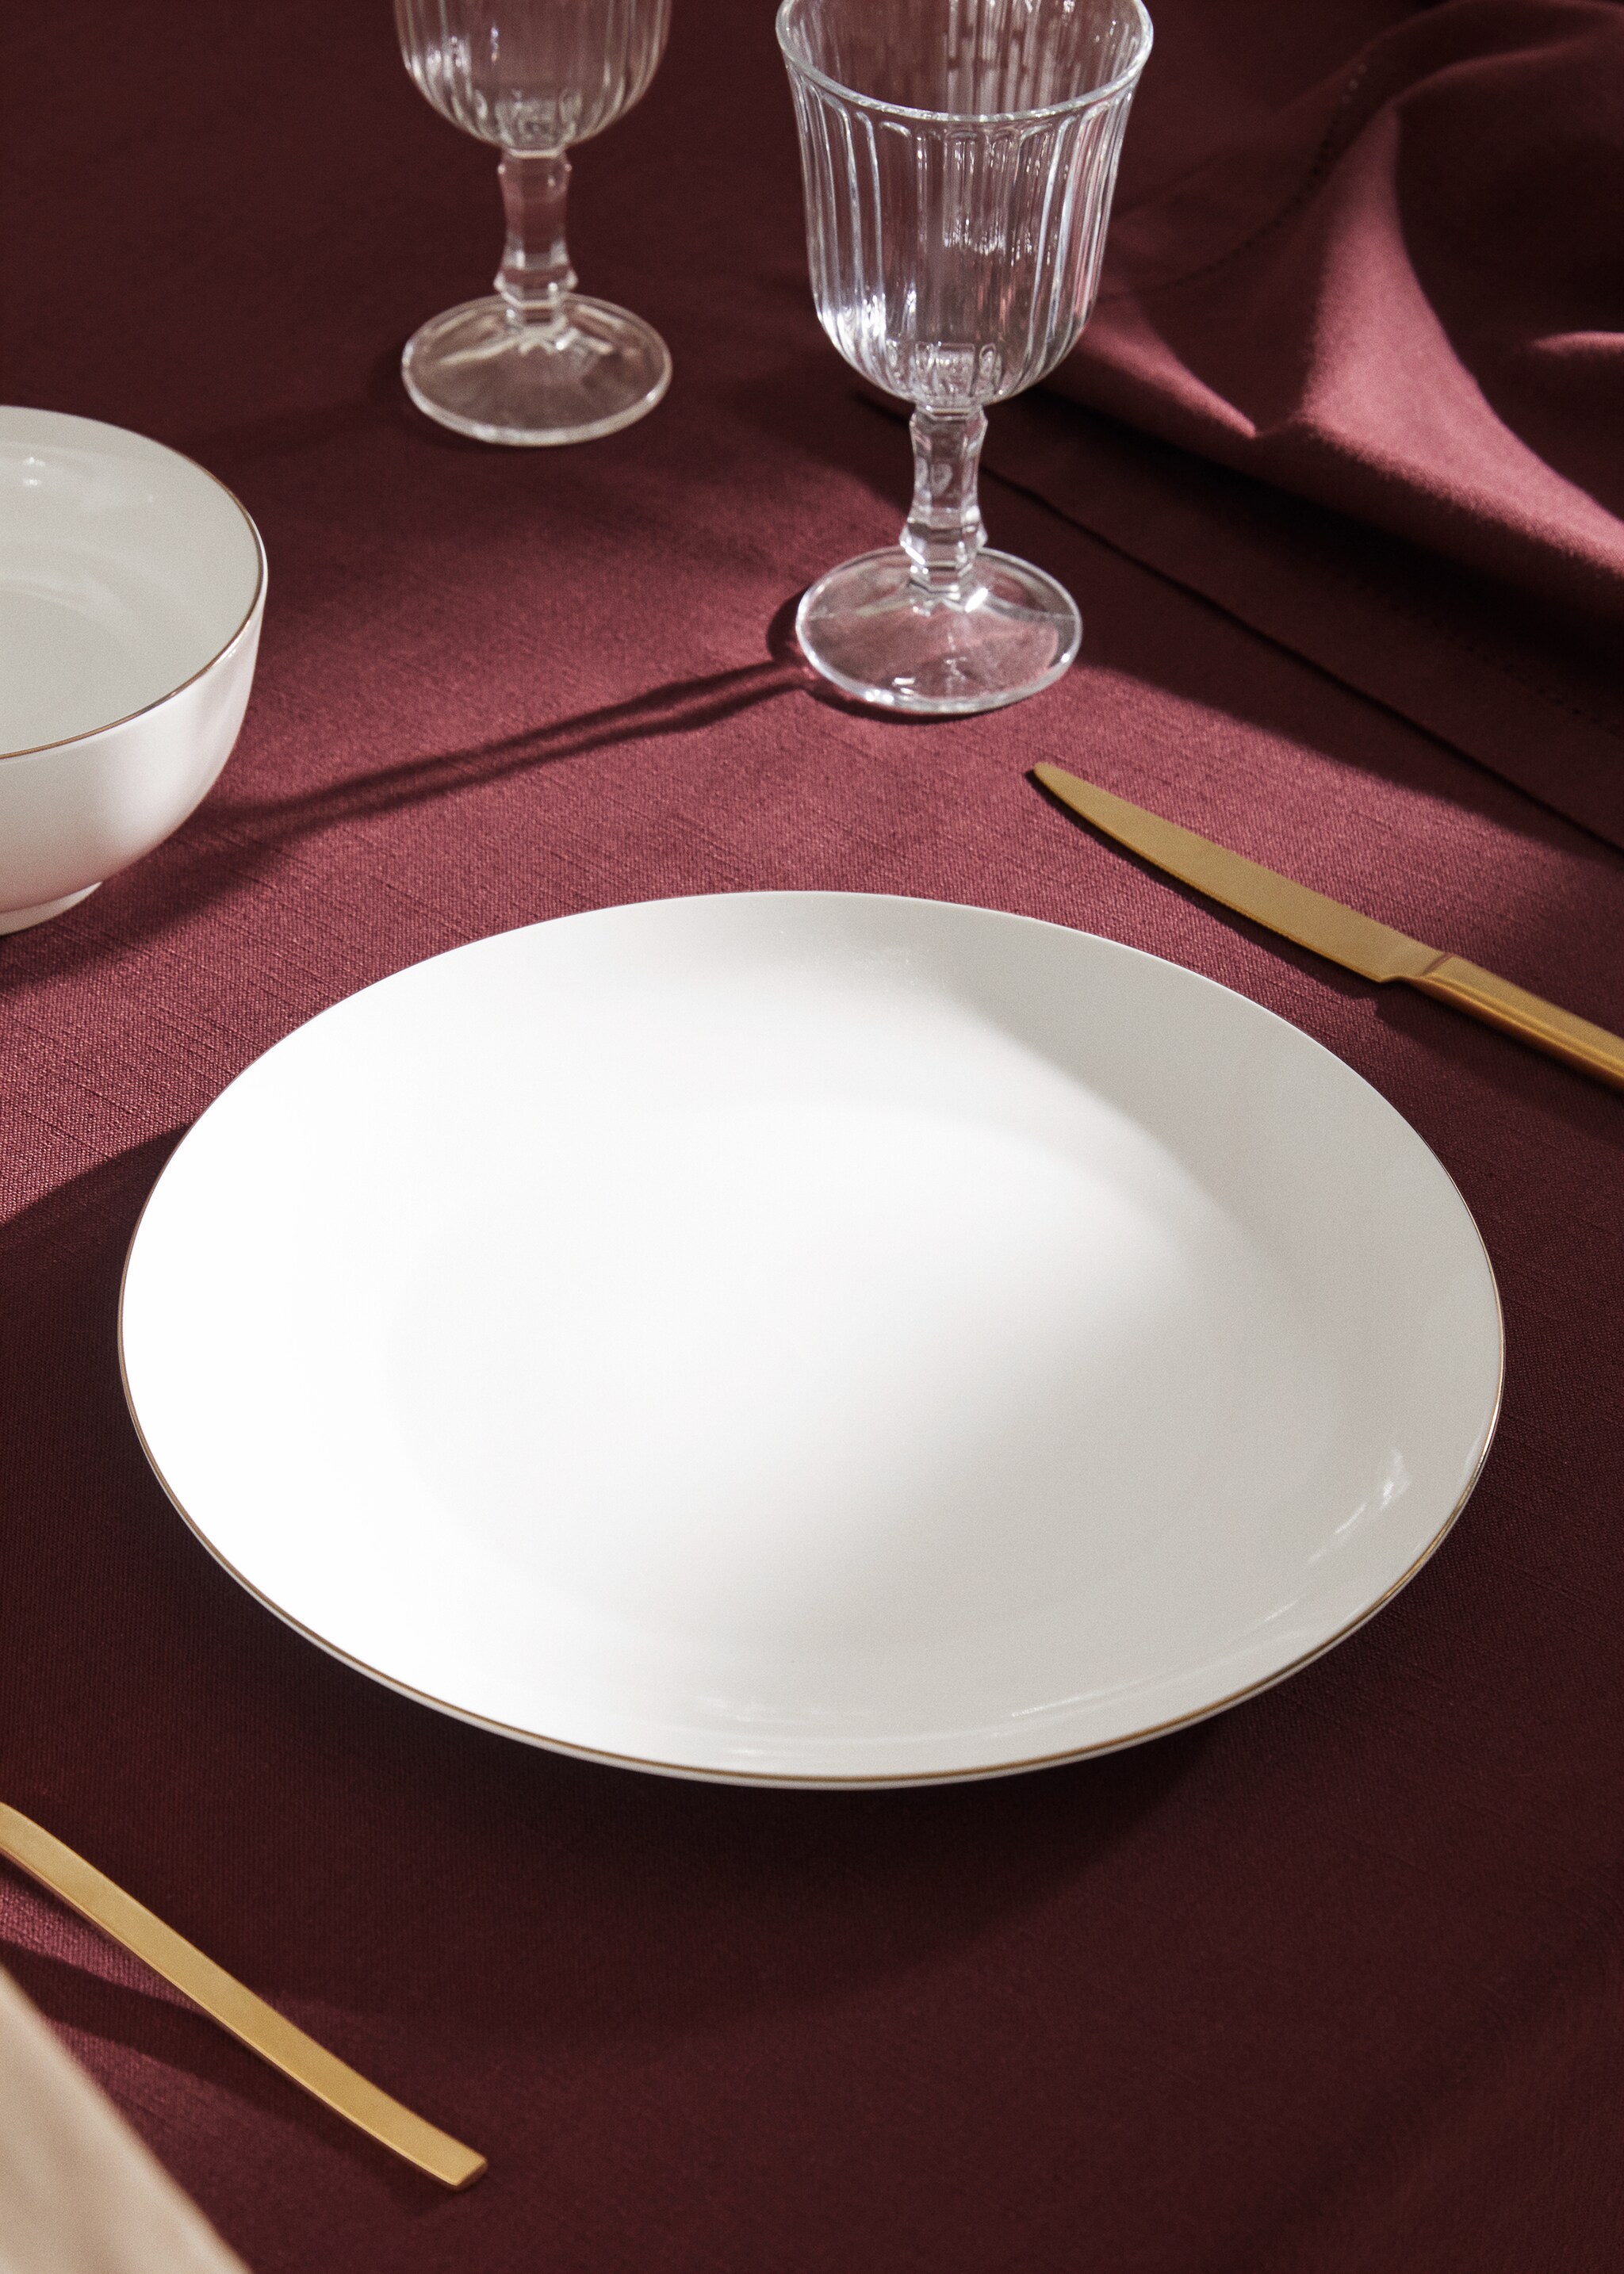 Bone china dinner plate with rim - General plane